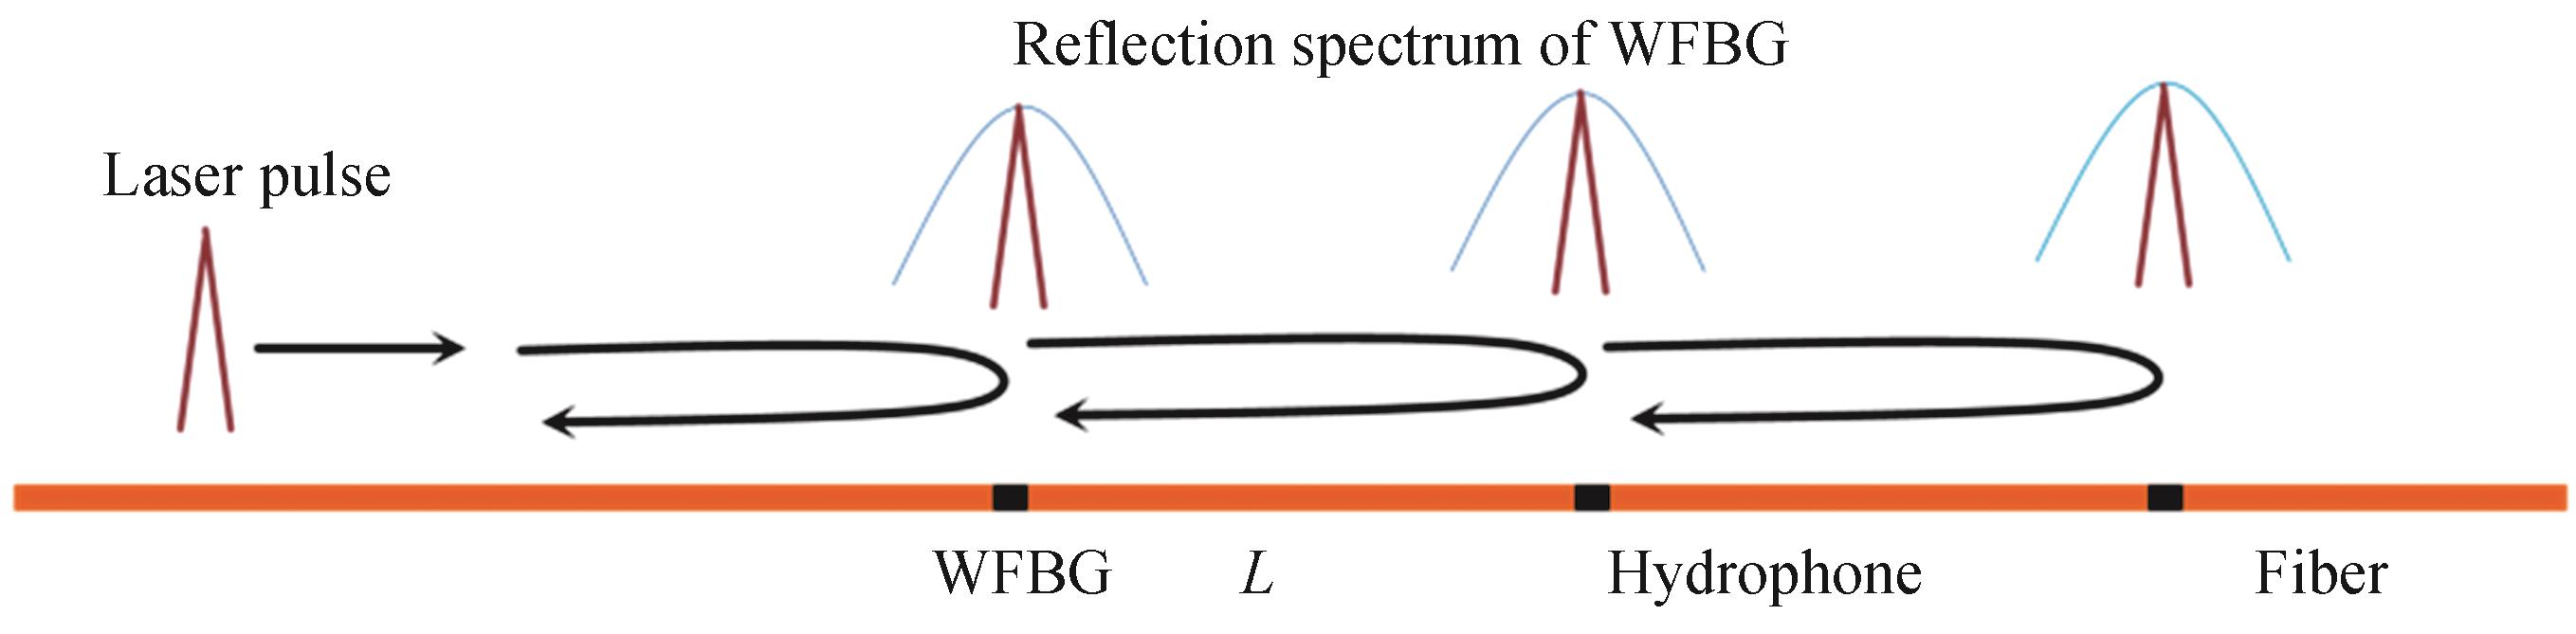 Schematic diagram of laser pulse transmission in WFBG array